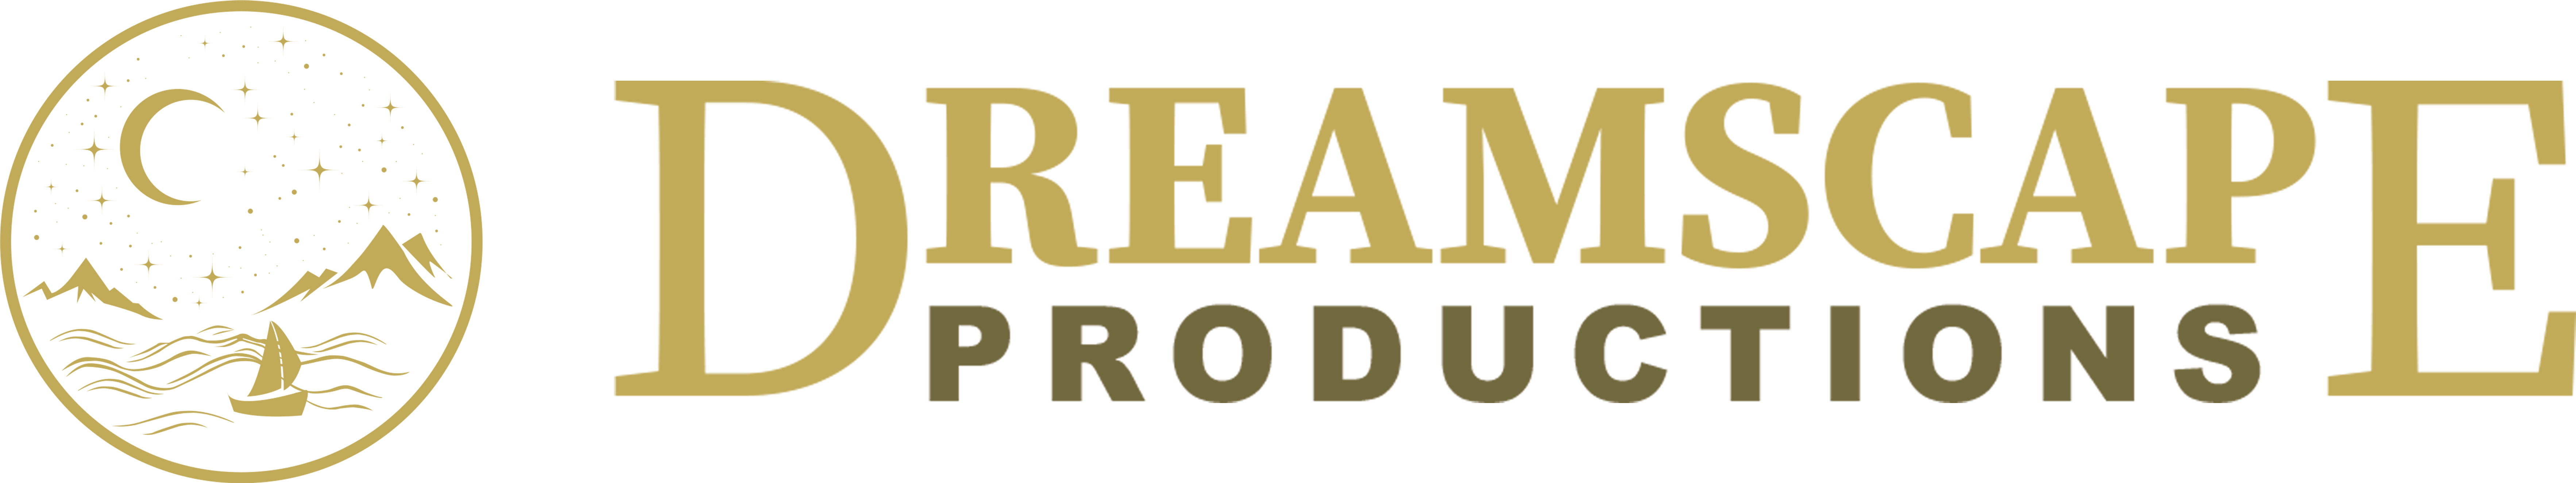 Dreamscape Productions